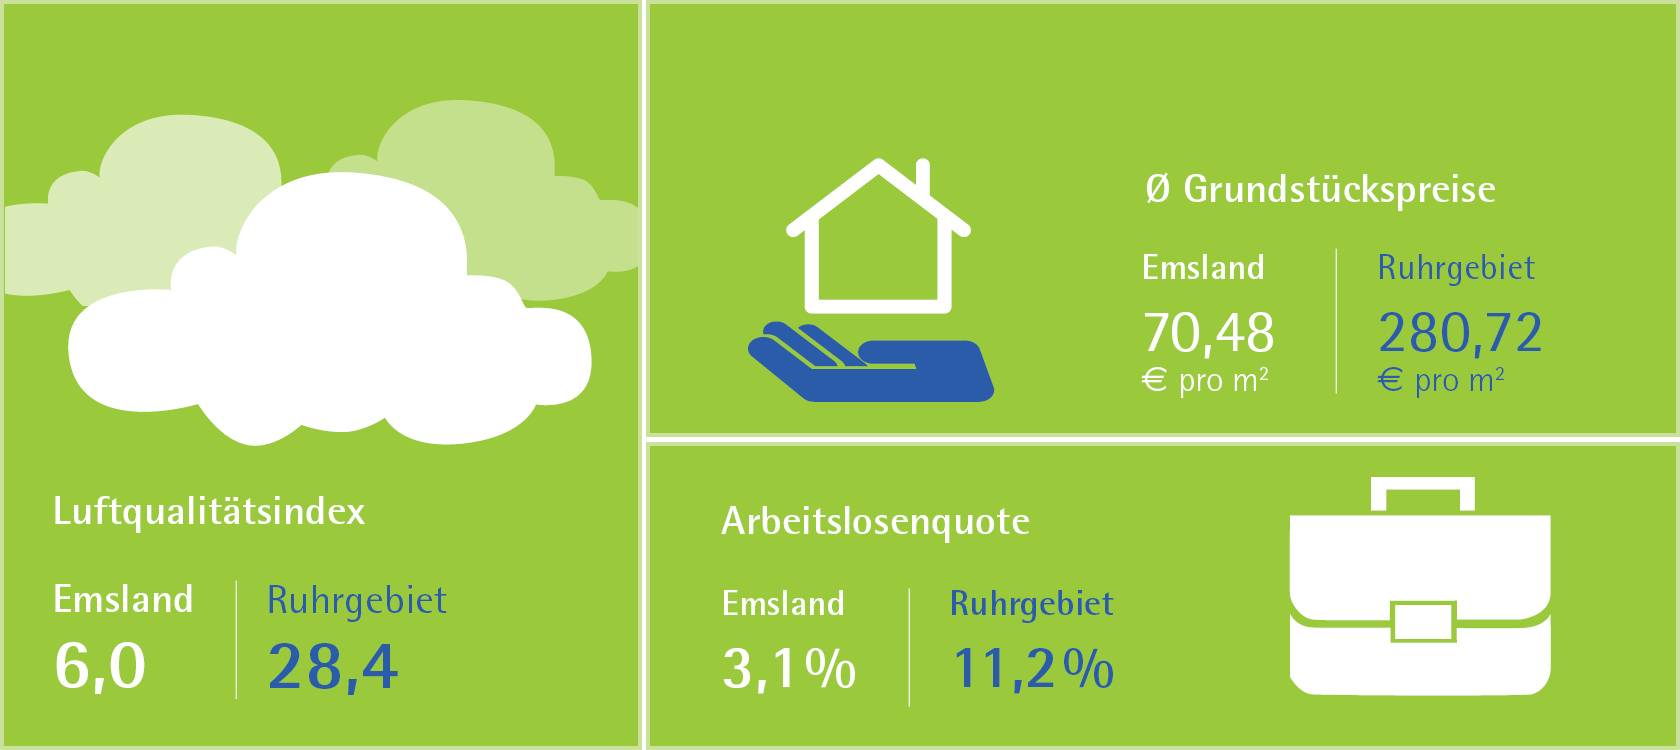 Emsland vs. Ruhrgebiet